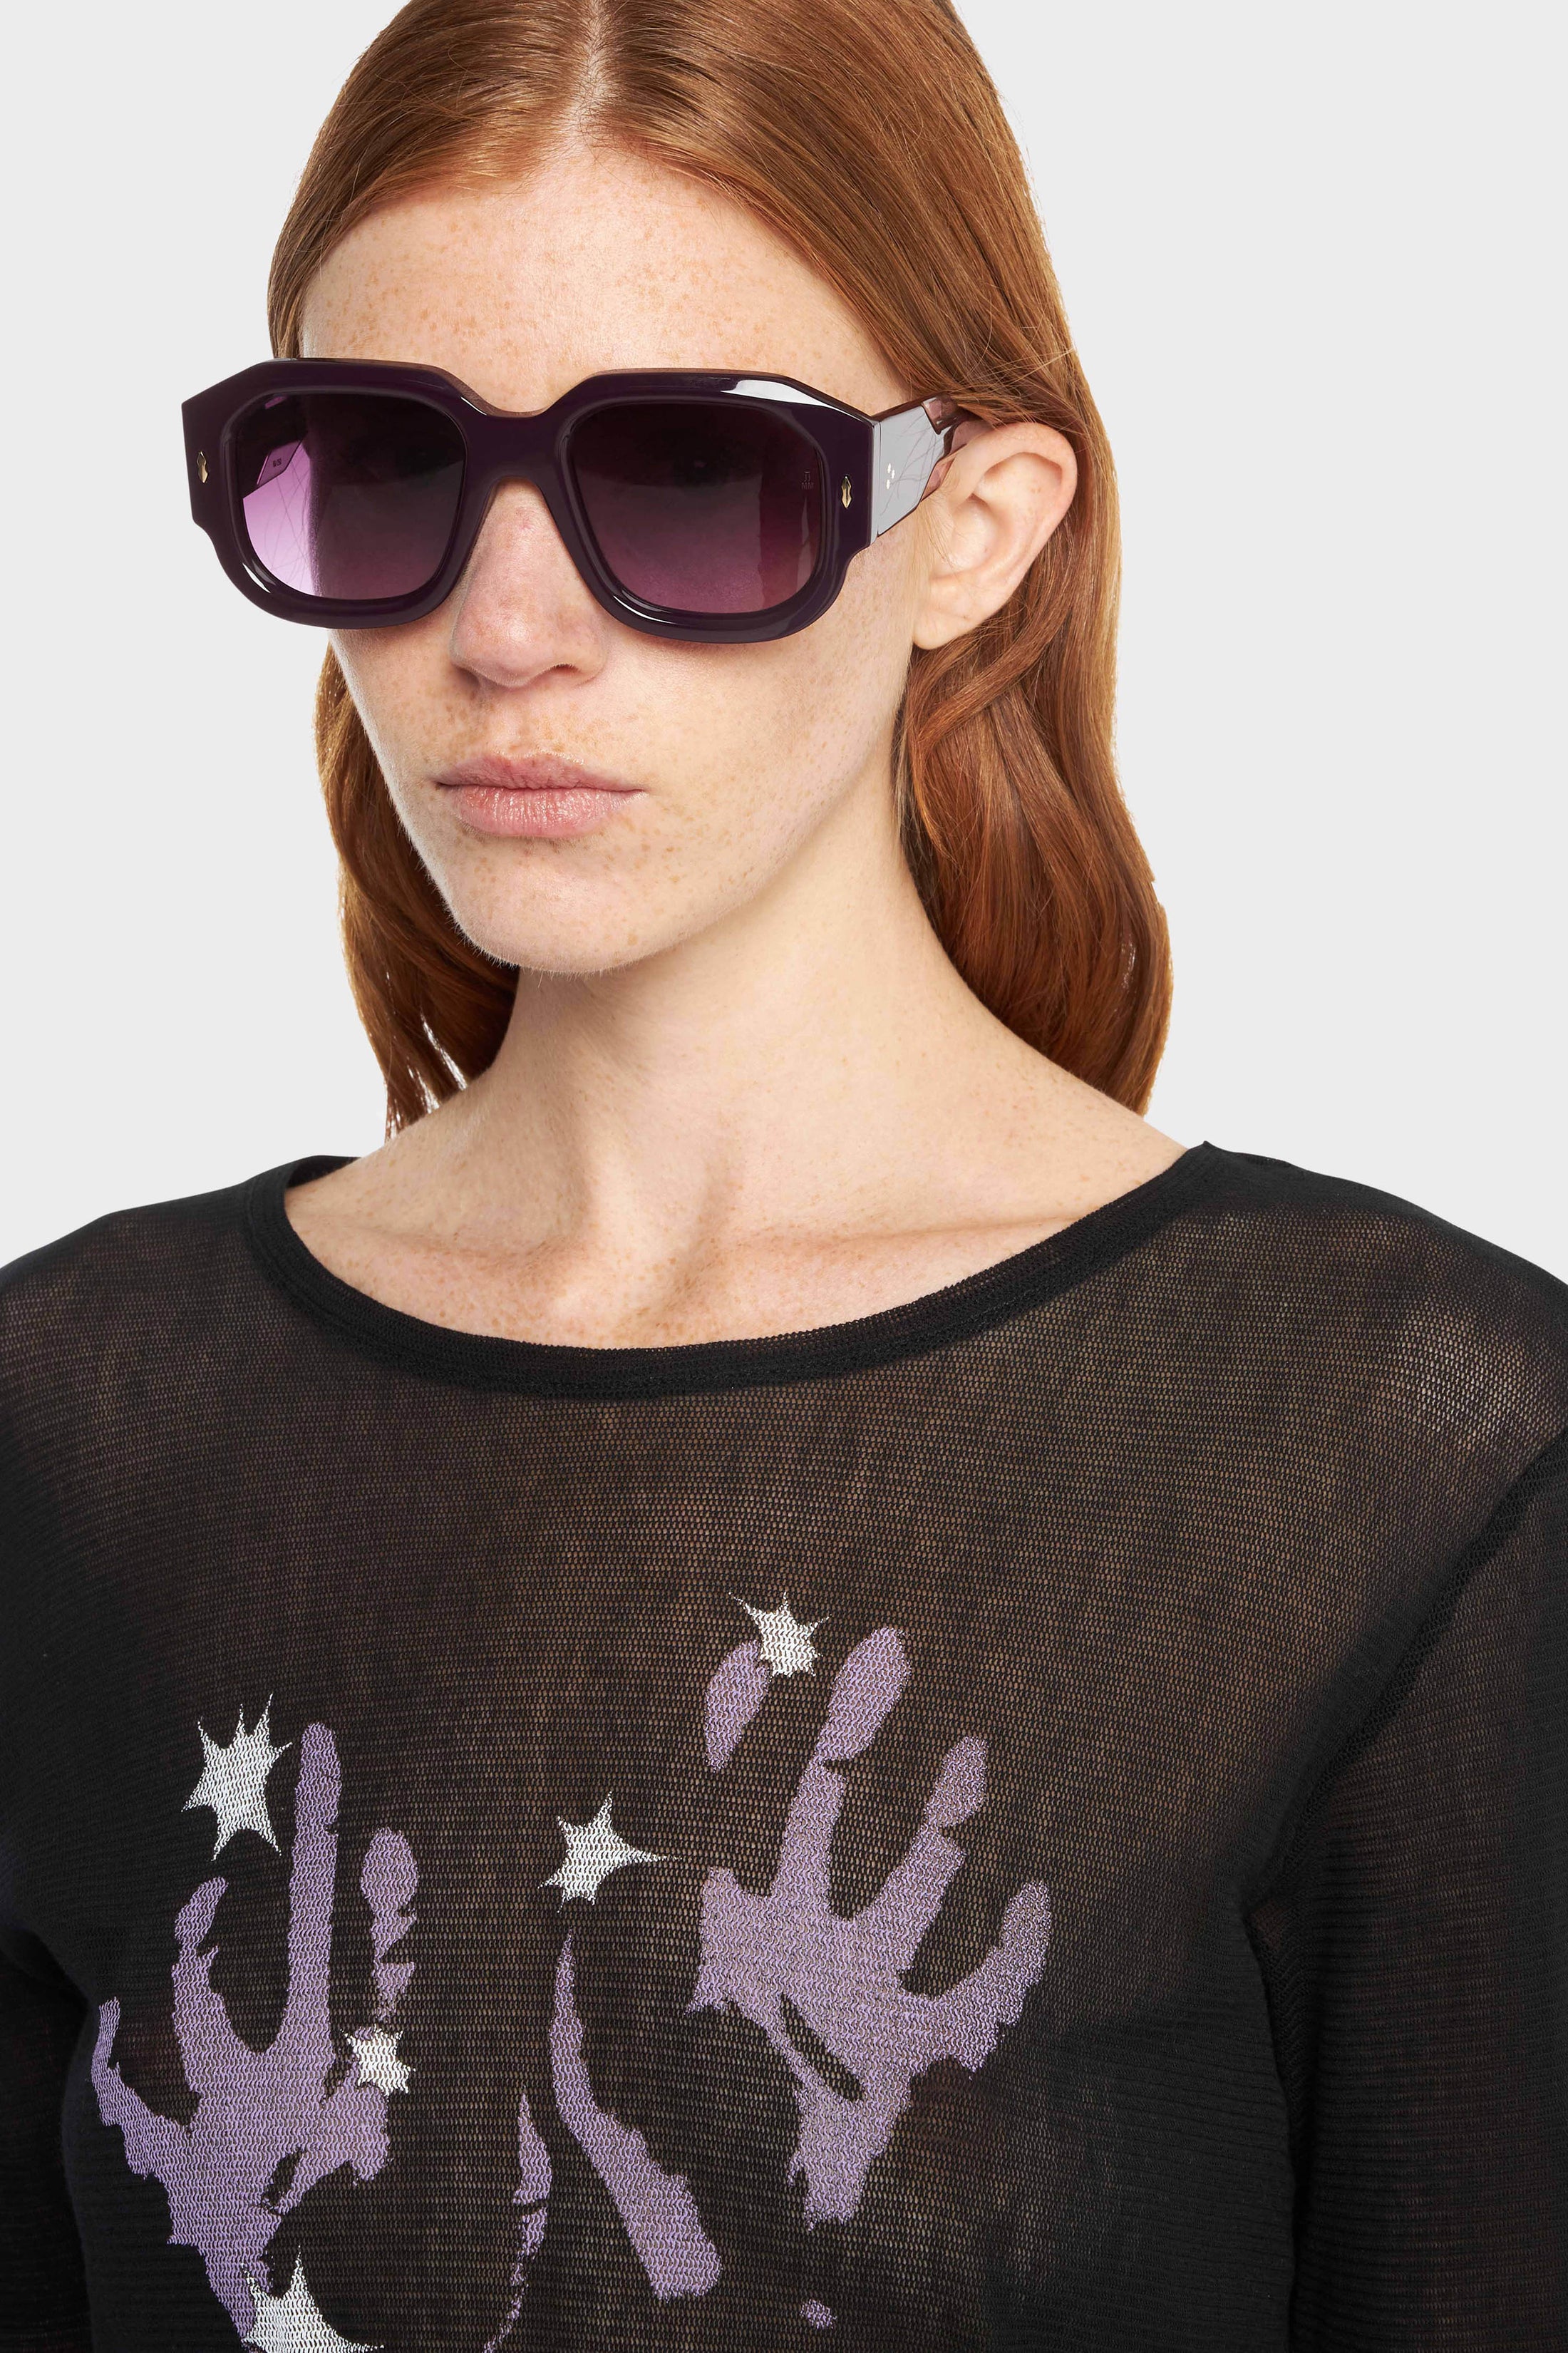 Lacy Purple Sunglasses